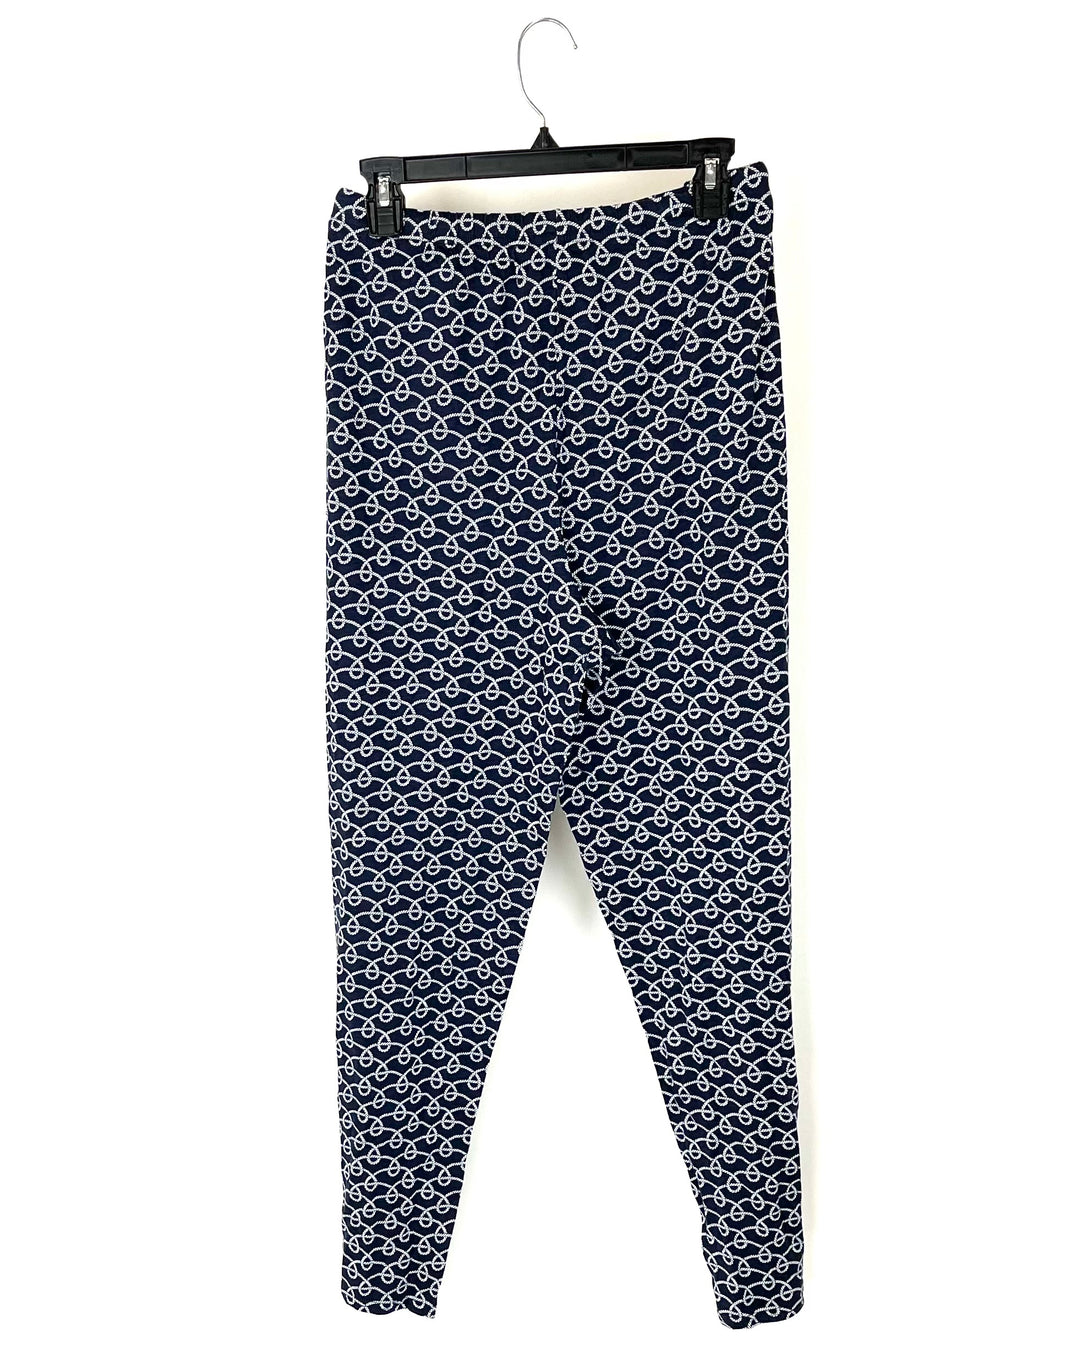 Navy Rope Print Pajama Pants - Small, 1X